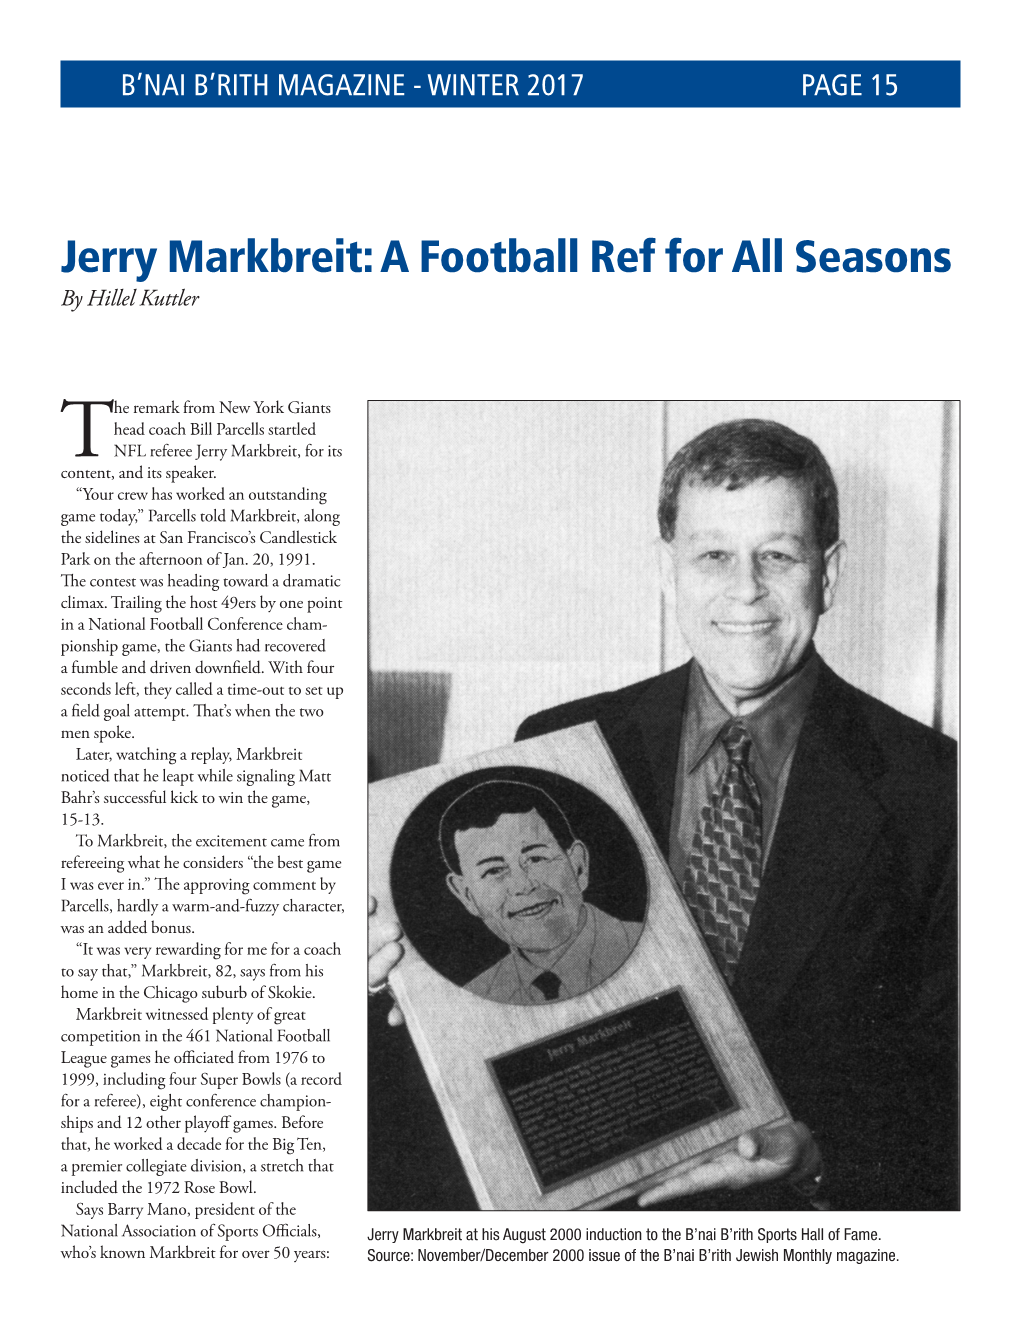 Jerry Markbreit: a Football Ref for All Seasons by Hillel Kuttler